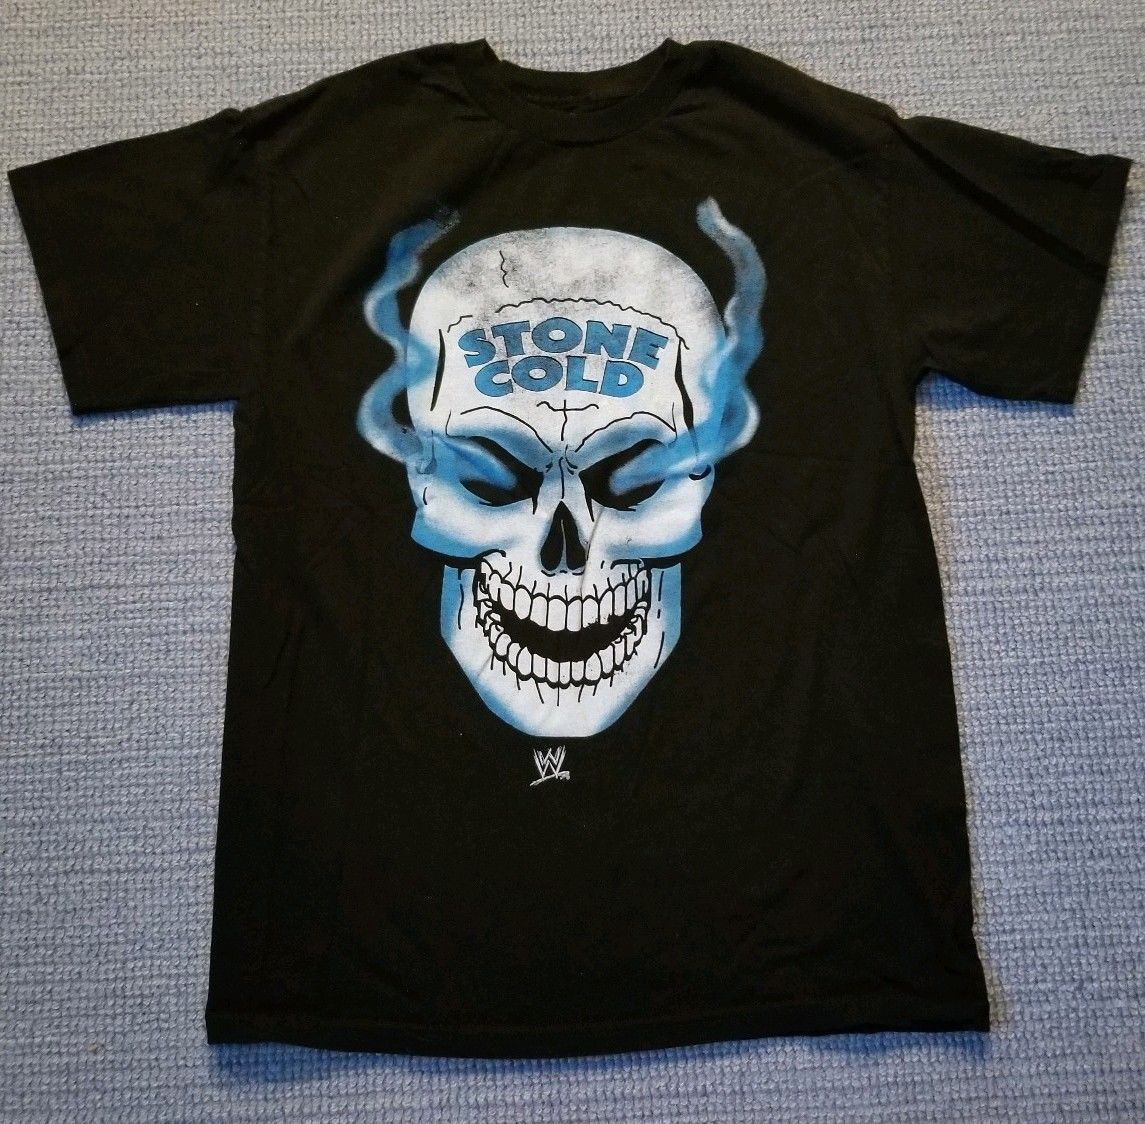 Wwe Stone Cold Steve Austin Smoking Skull Black Shirt - TattoosCafe